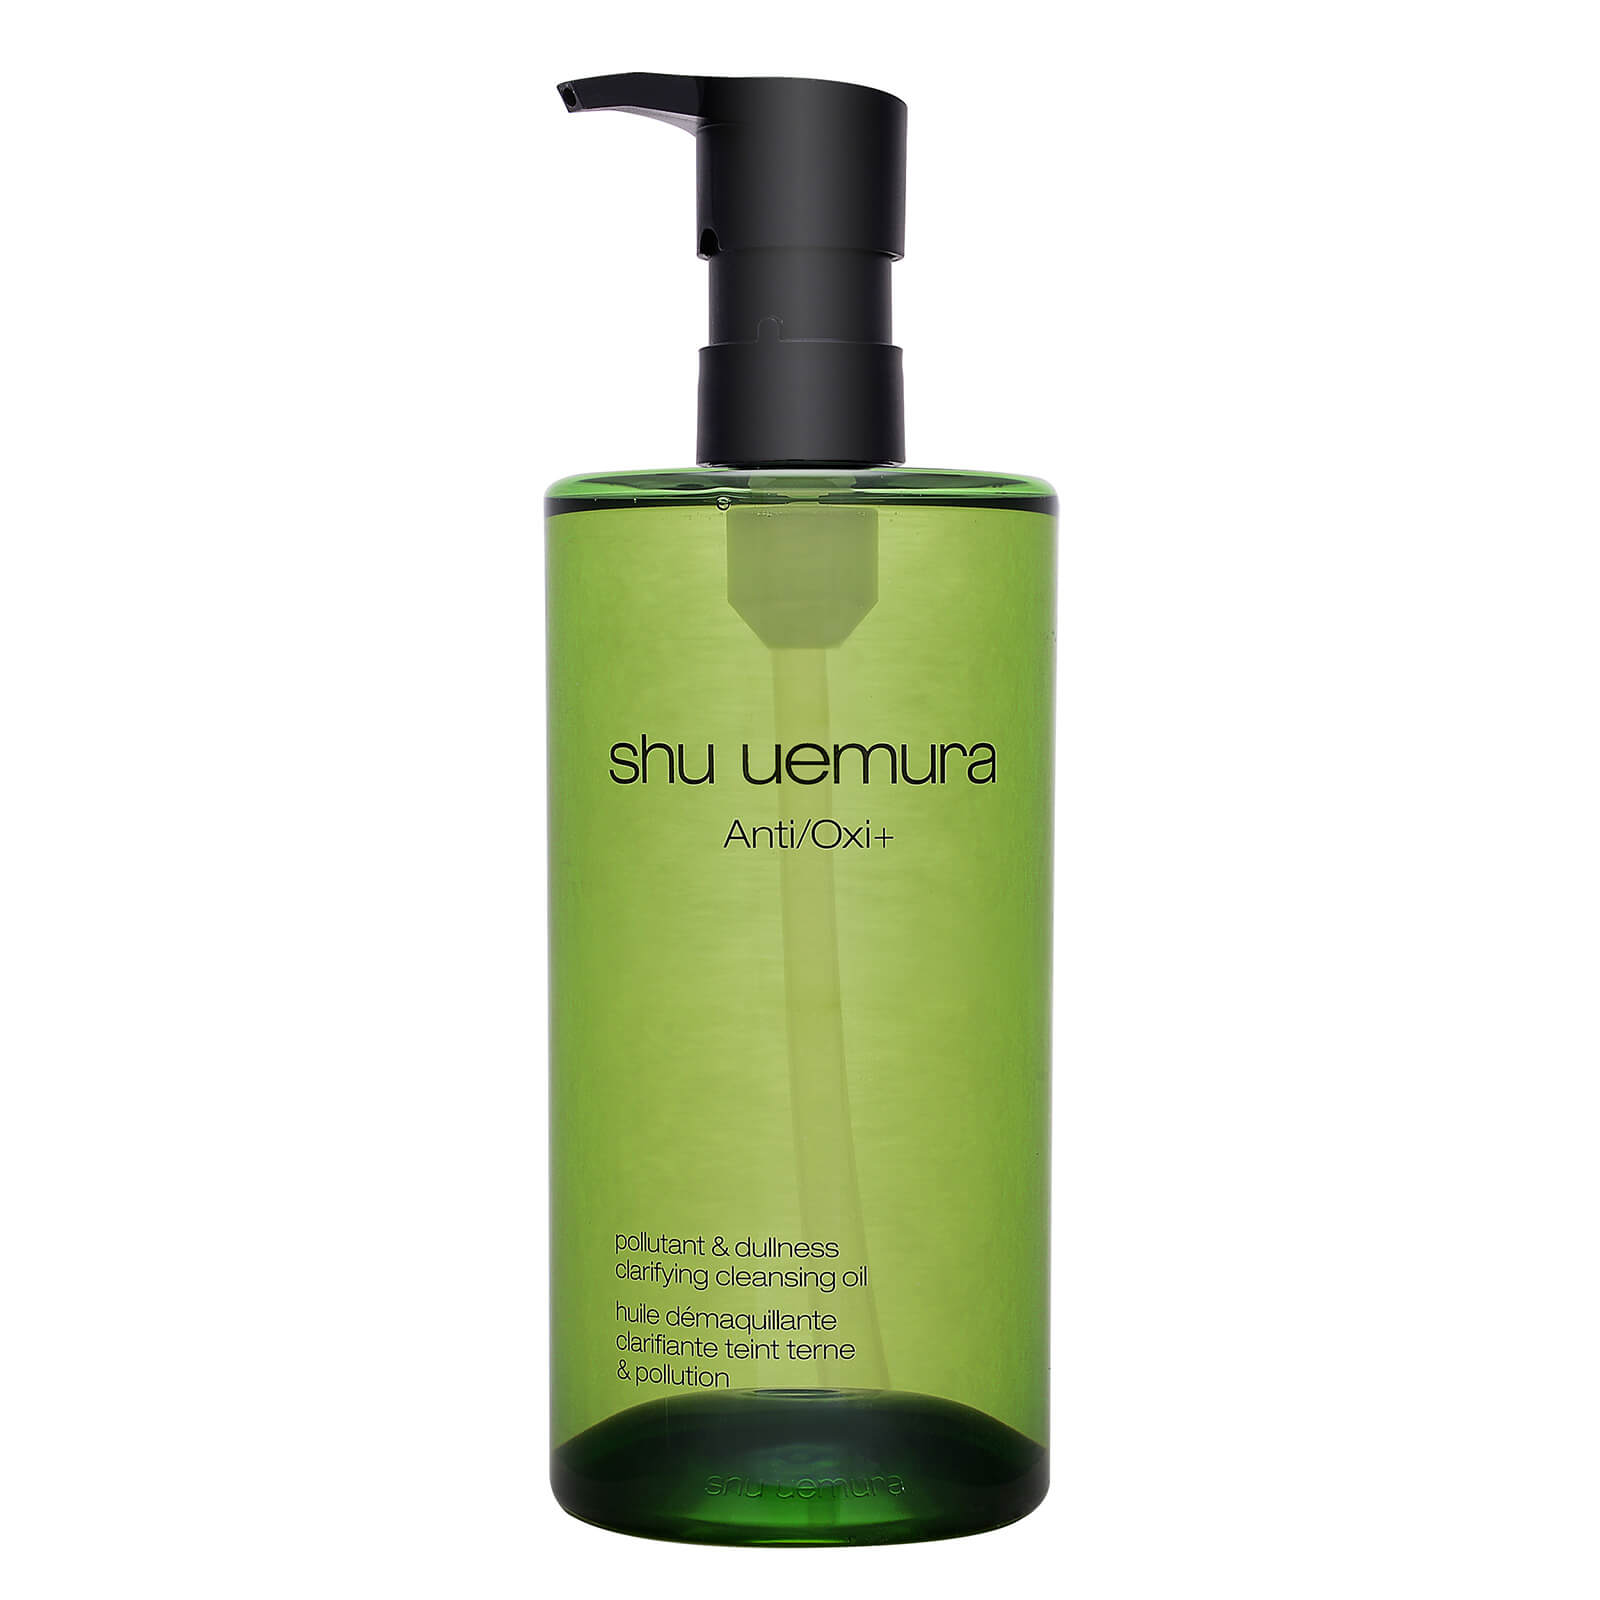 Skin Purifier Anti/Oxi+ Pollutant & Dullness Clarifying Cleansing Oil